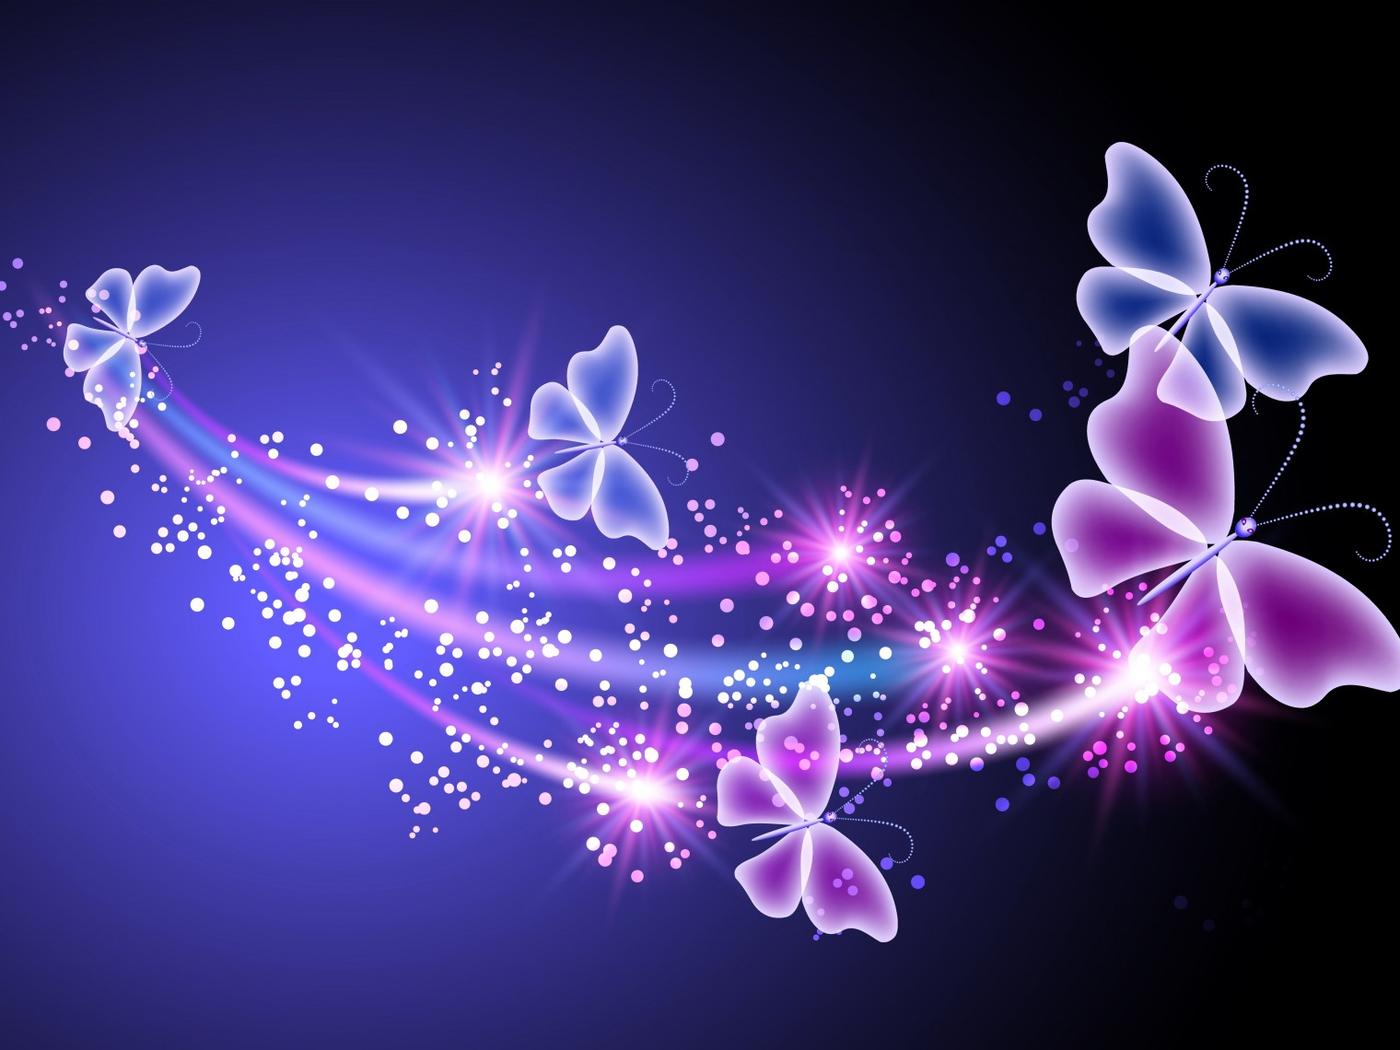 Pink and purple flying butterflies - Digital art design